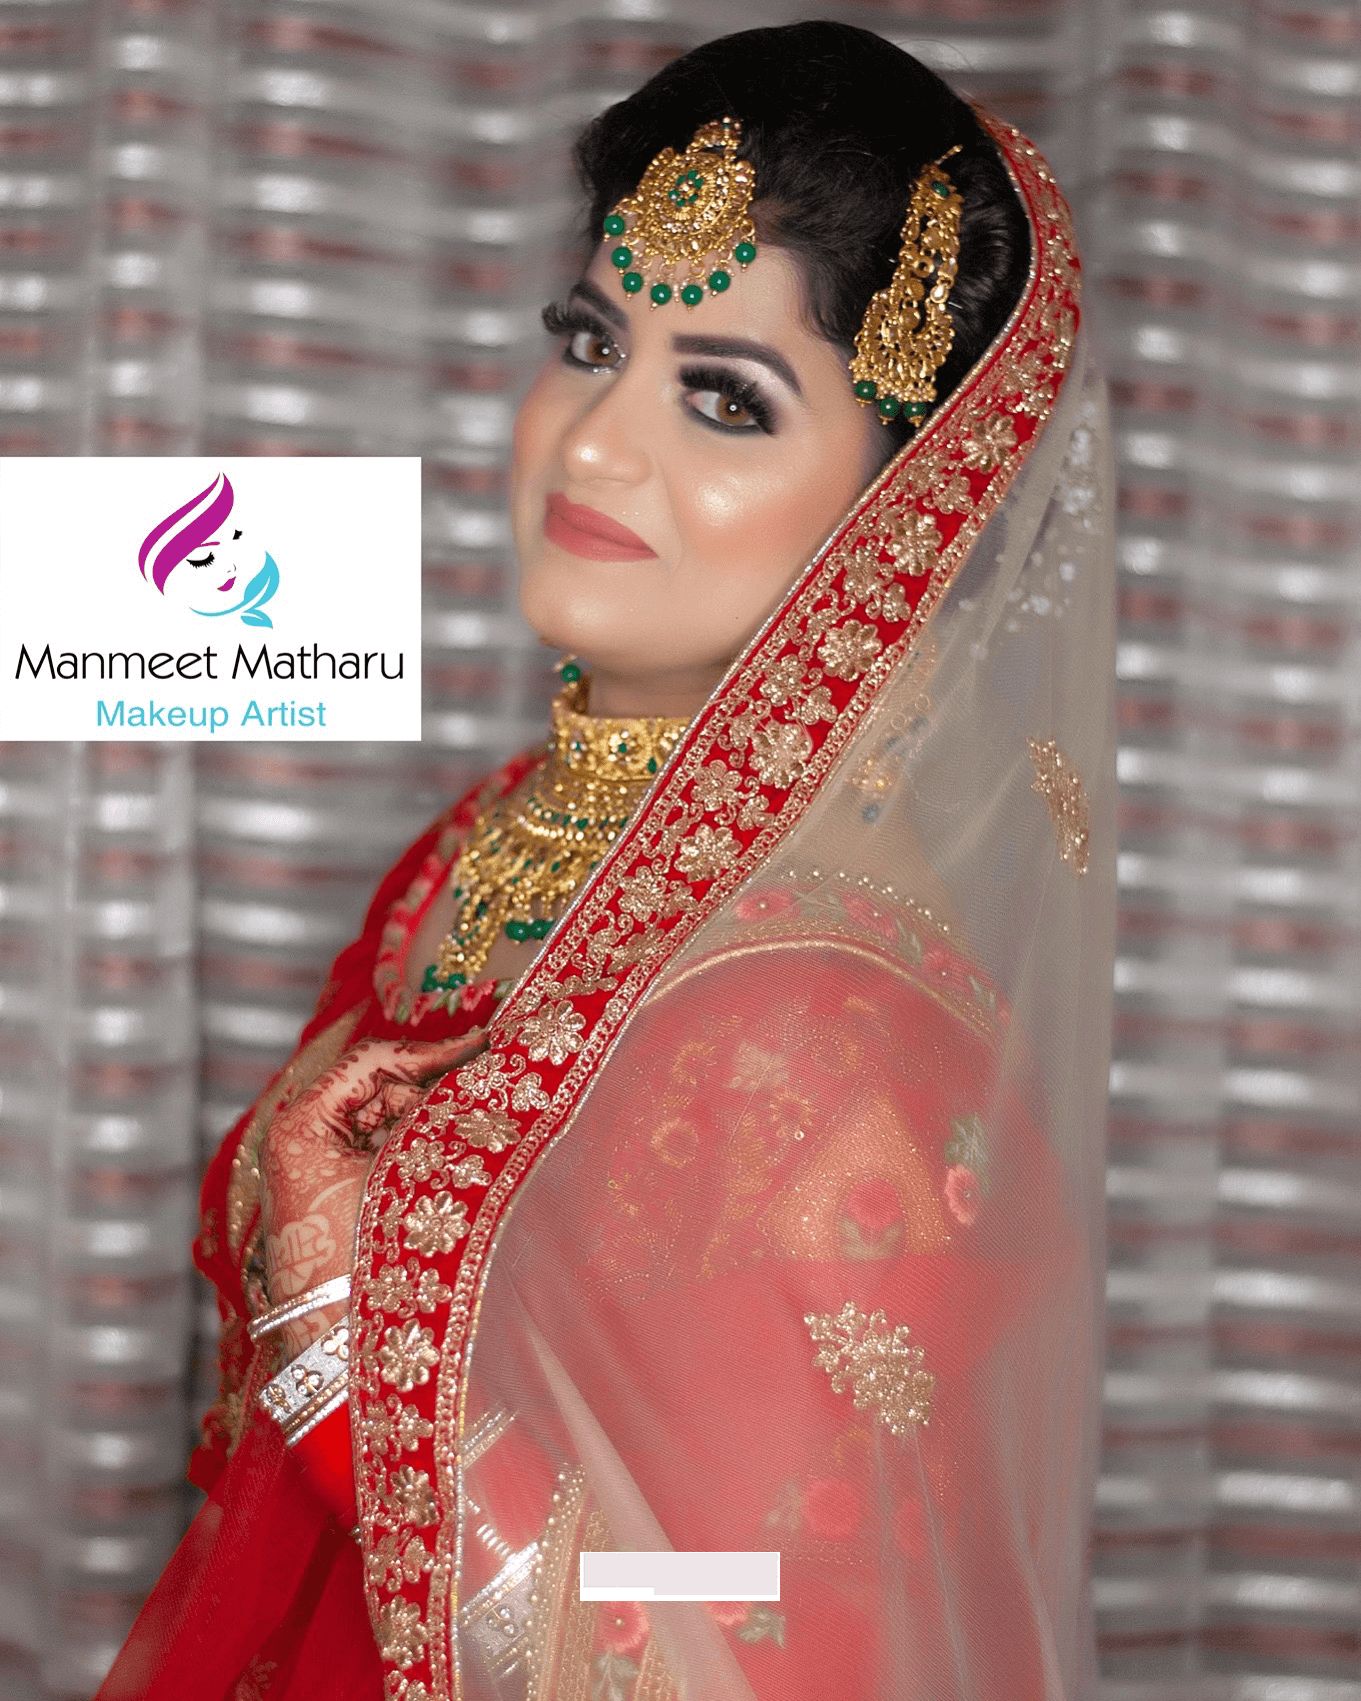 Manmeet Matharu - Makeup Artist